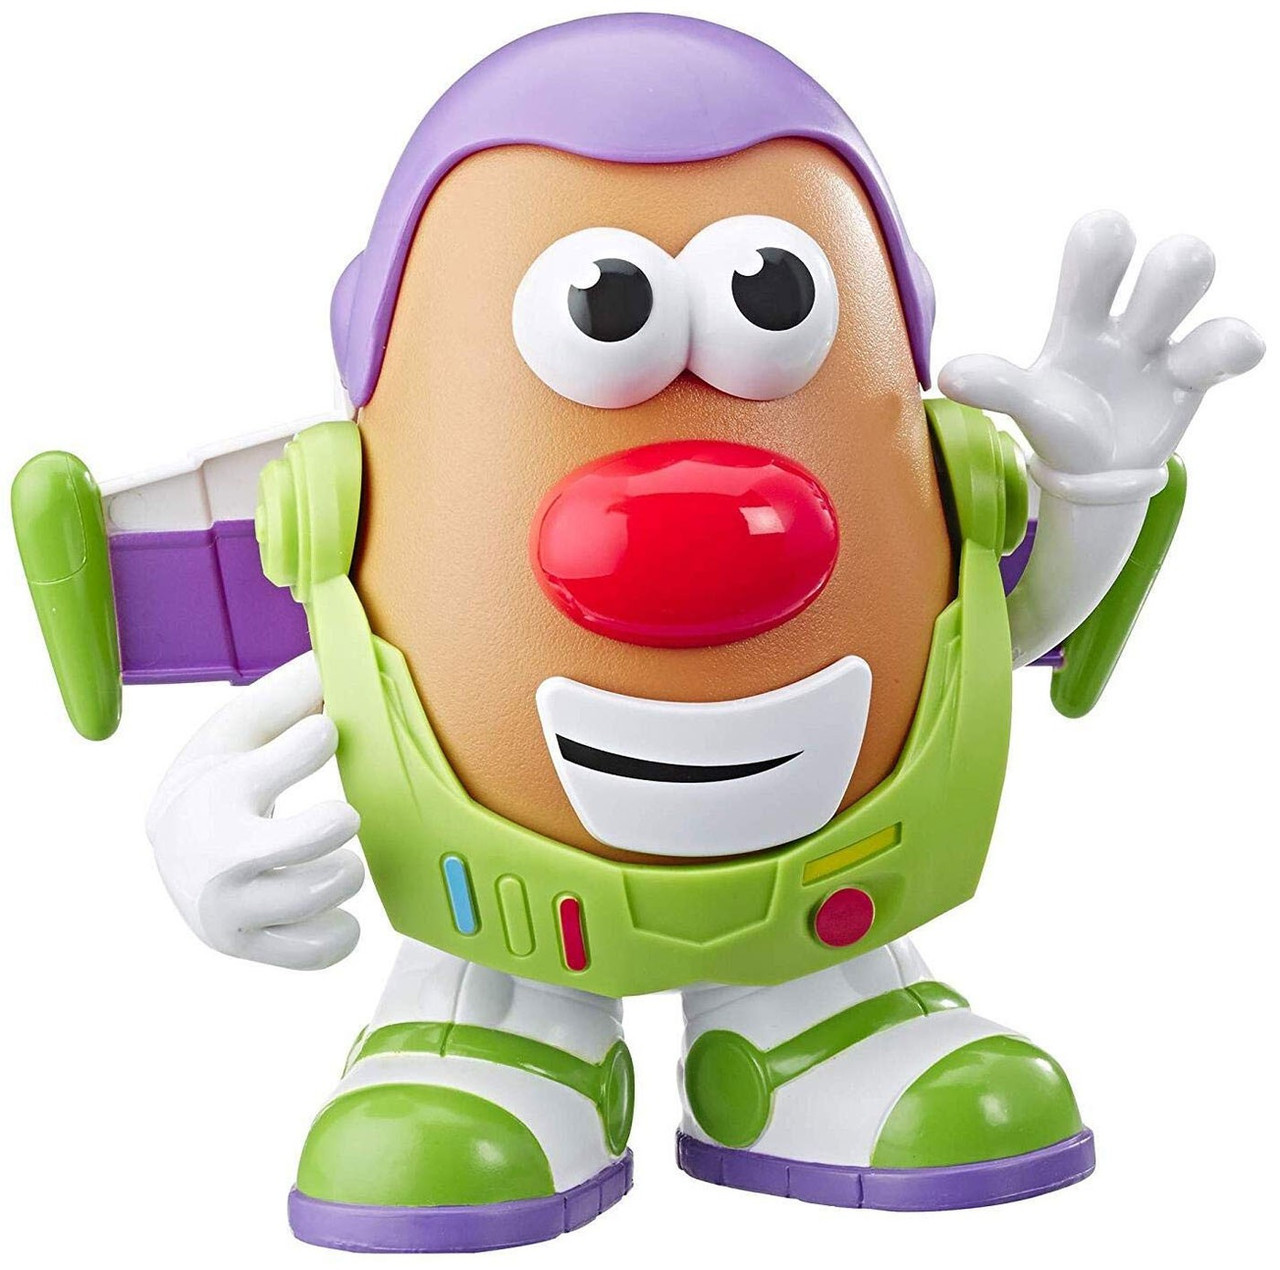 Toy Story 4 Mr Potato Head Spud Lightyear Figure Playskool Toywiz